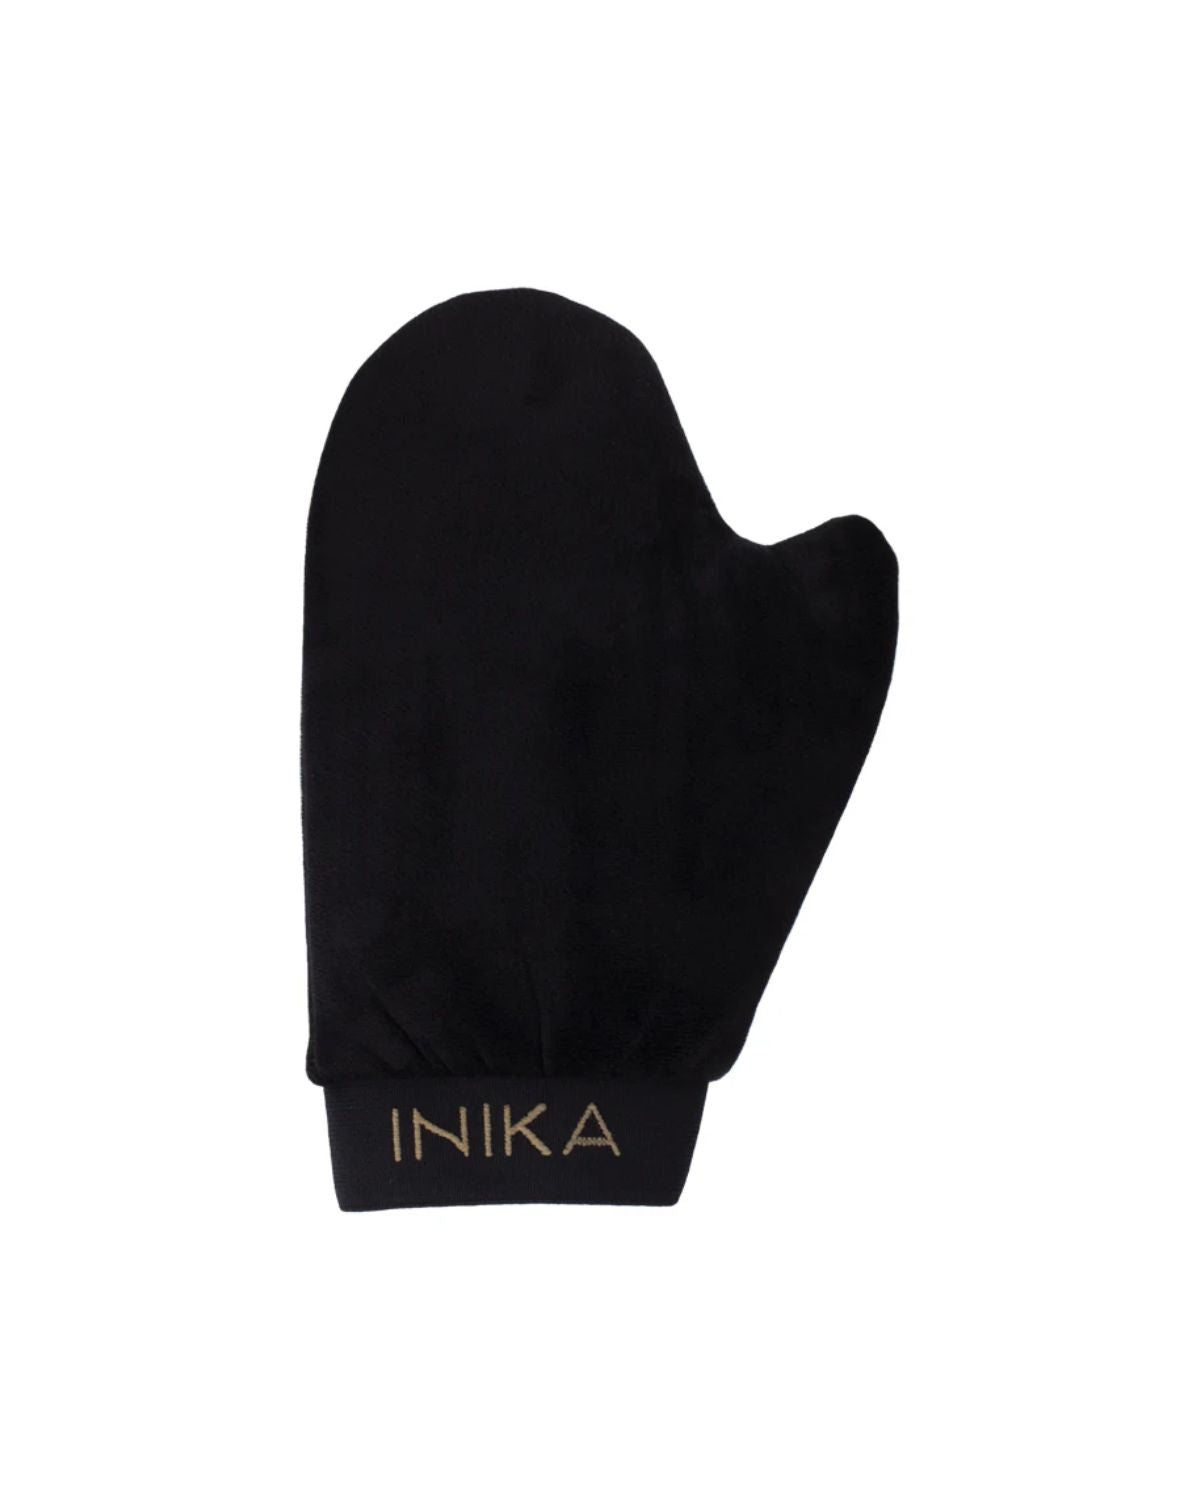 INIKA Tanning Glove